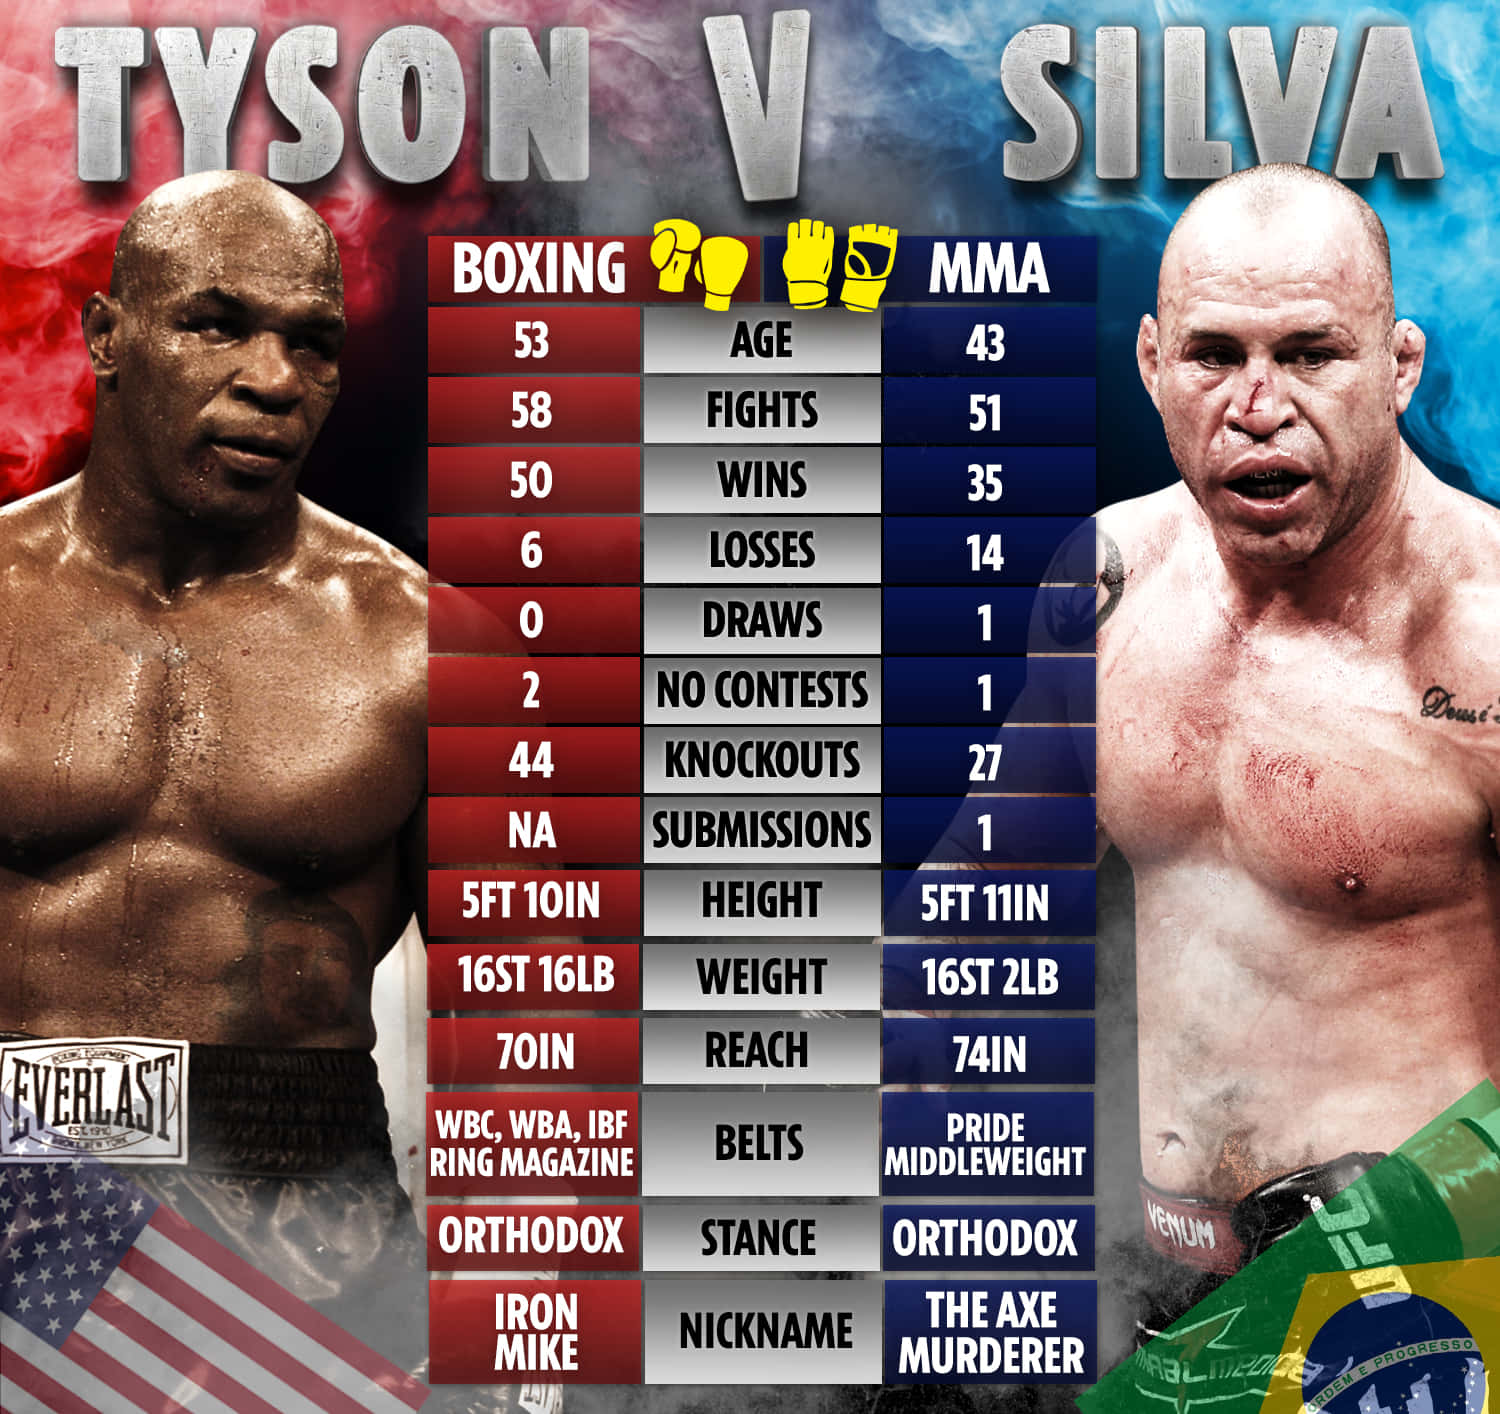 Mixed Martial Artist Wanderlei Silva Versus Legend Mike Tyson Face-off Picture